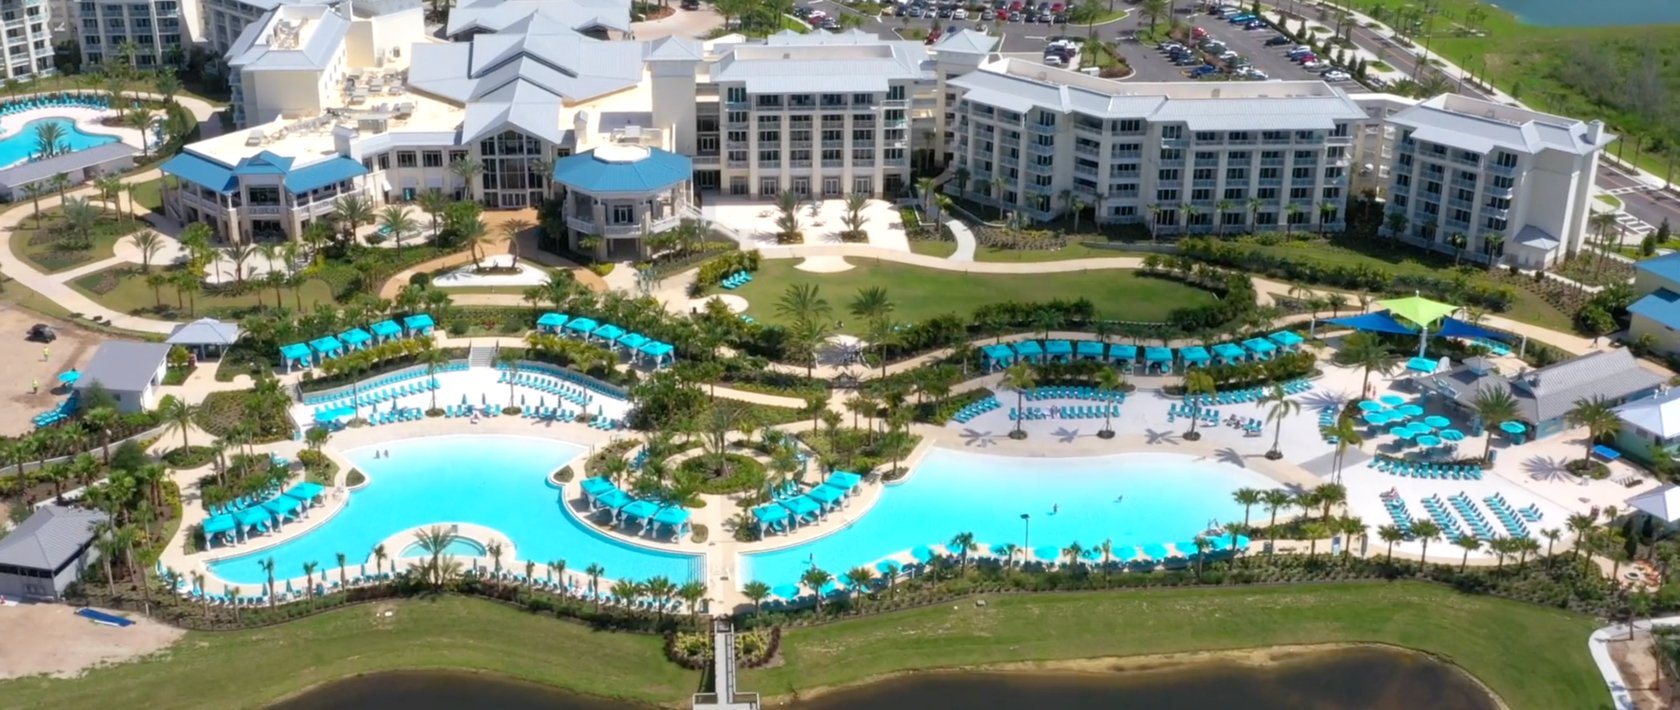 Margaritaville Orlando Resort Sales